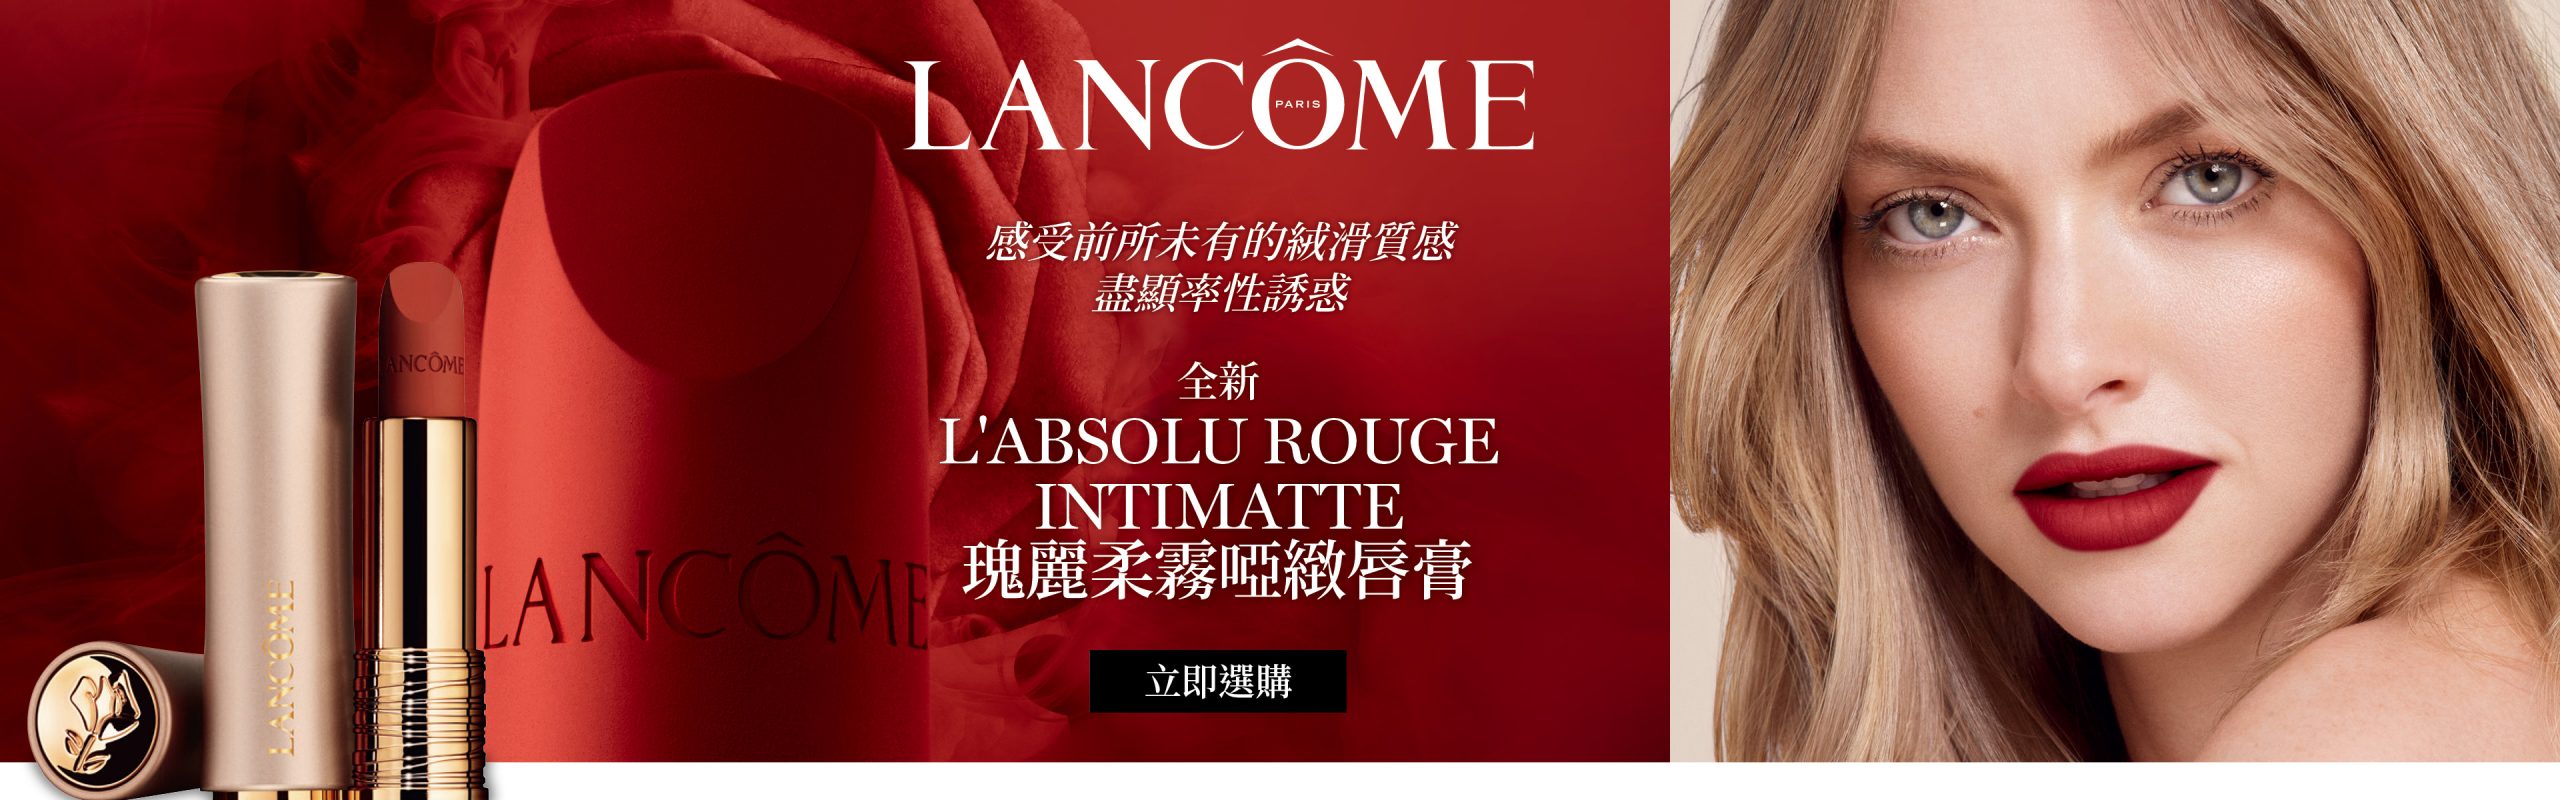 Lancome 小黑瓶 極光水 護膚品 化妝品 限時 優惠 折扣 代碼 優惠碼 Promo Discount Coupon Code